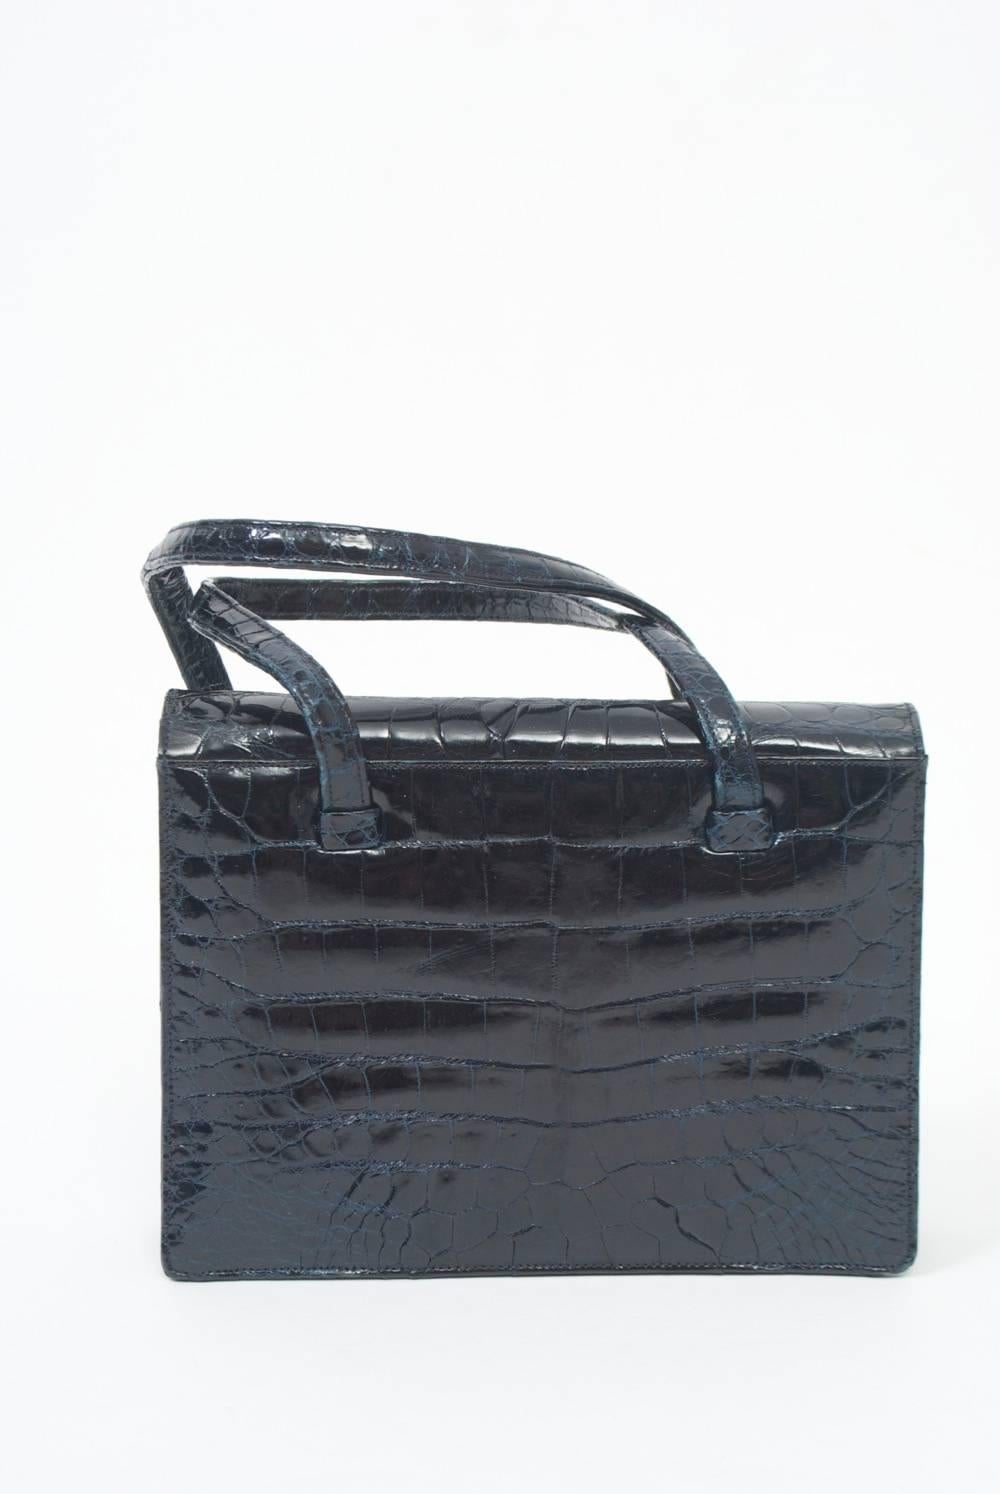 Black Crocodile Handbag In Excellent Condition For Sale In Alford, MA